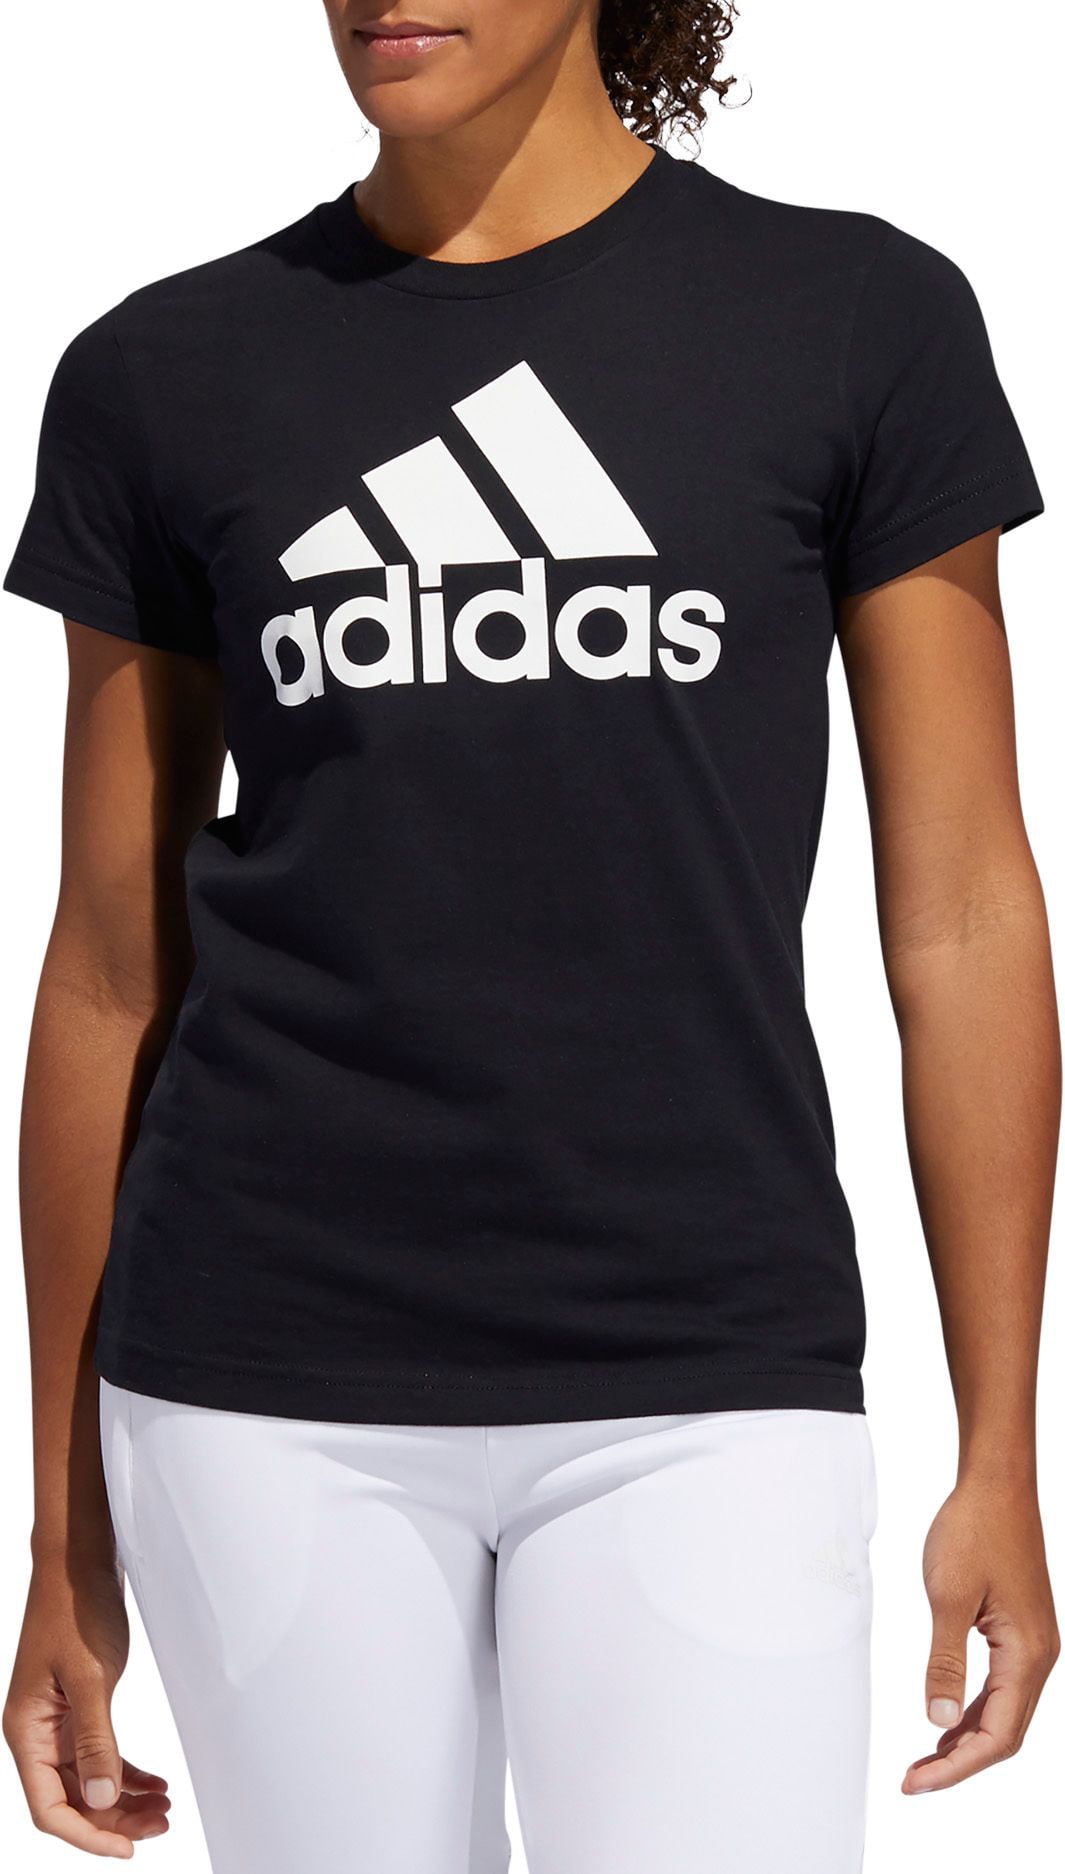 Adidas - adidas Women's Basic Badge of Sport T-Shirt - Walmart.com